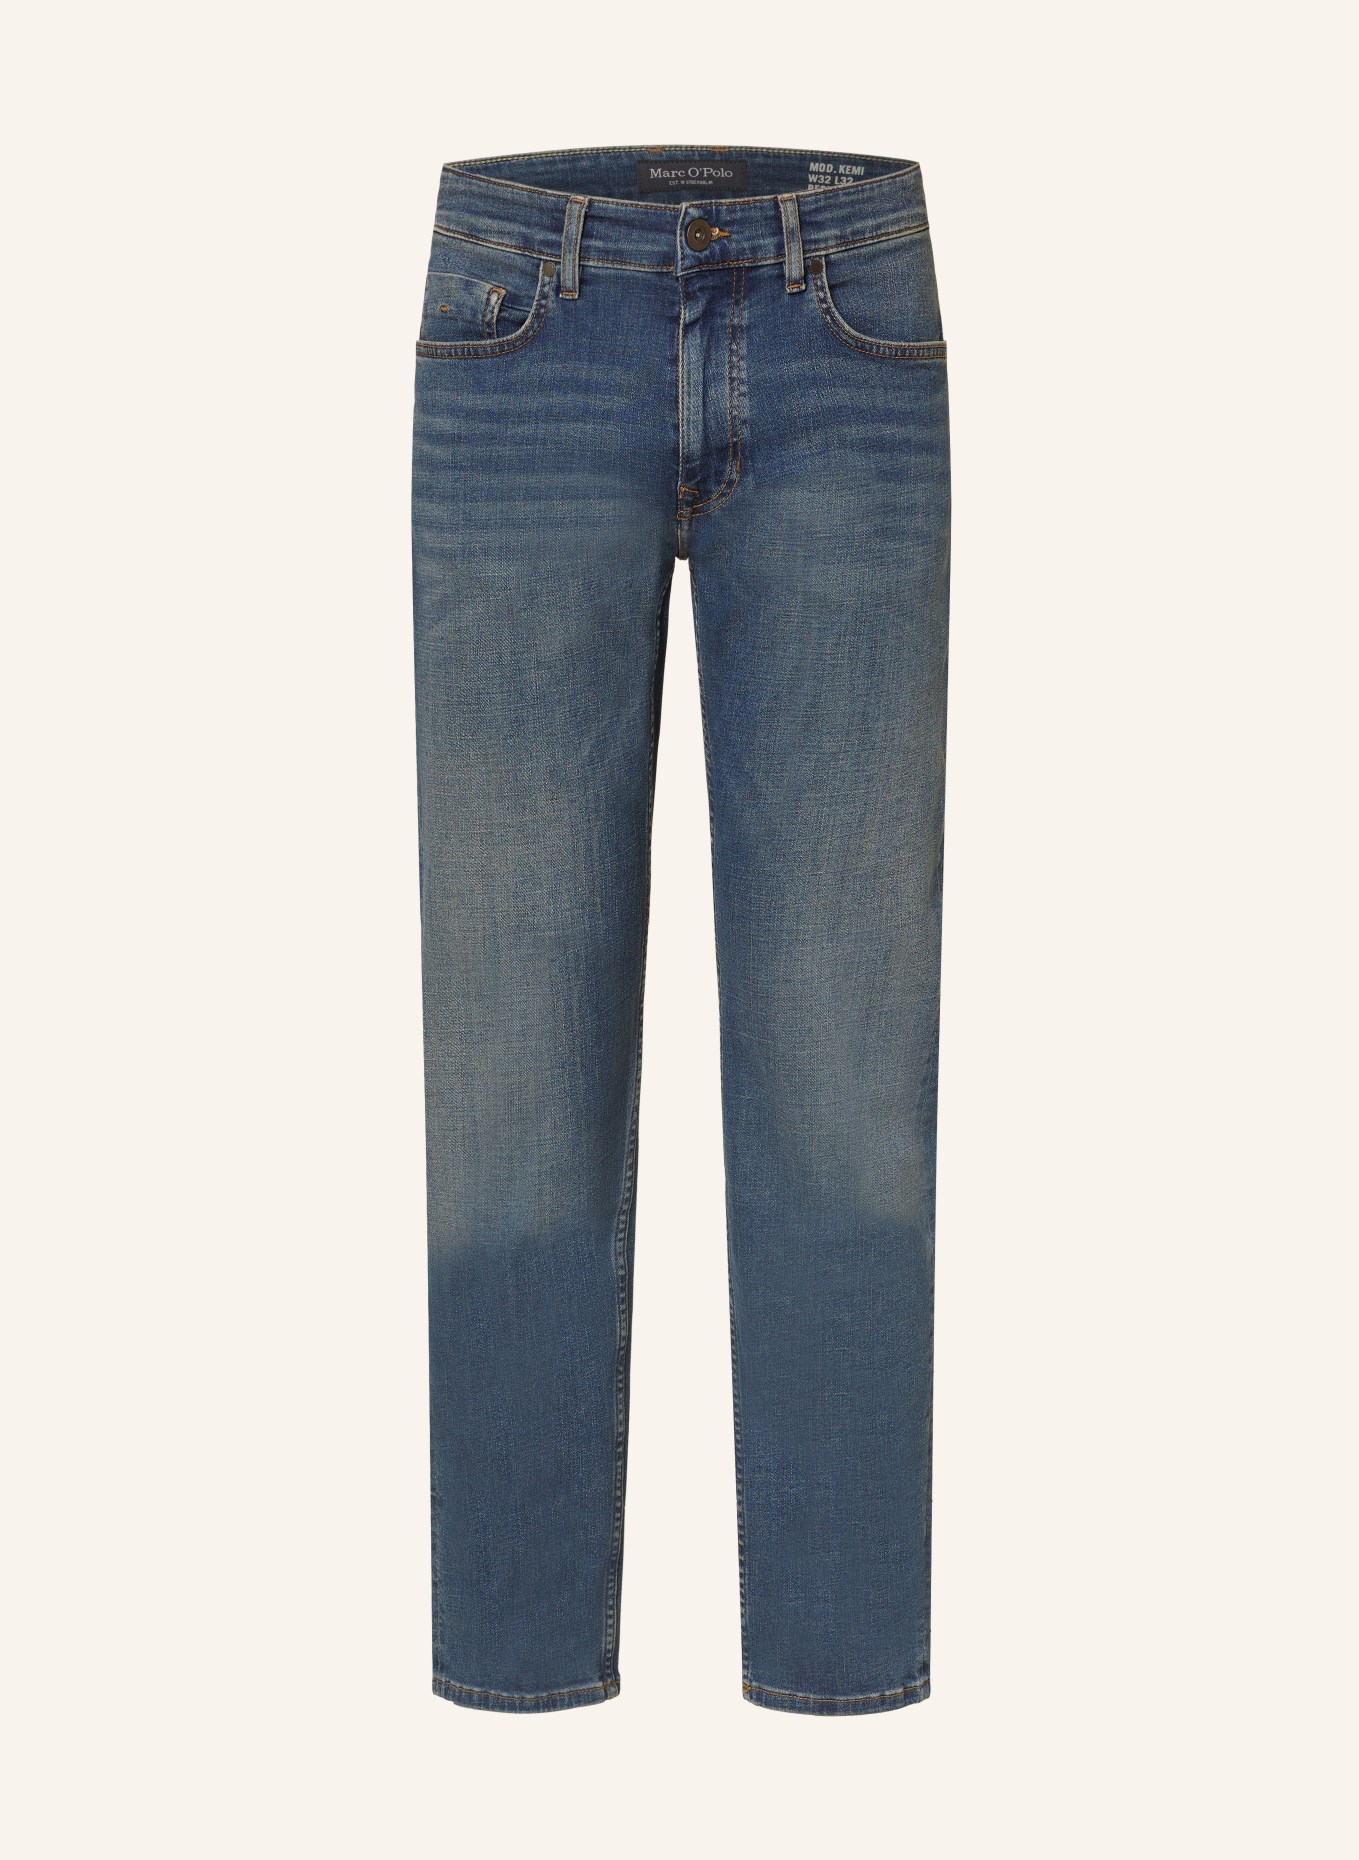 Marc O'Polo Jeans KEMI Regular Fit, Farbe: 089 deep indigo vintage (Bild 1)